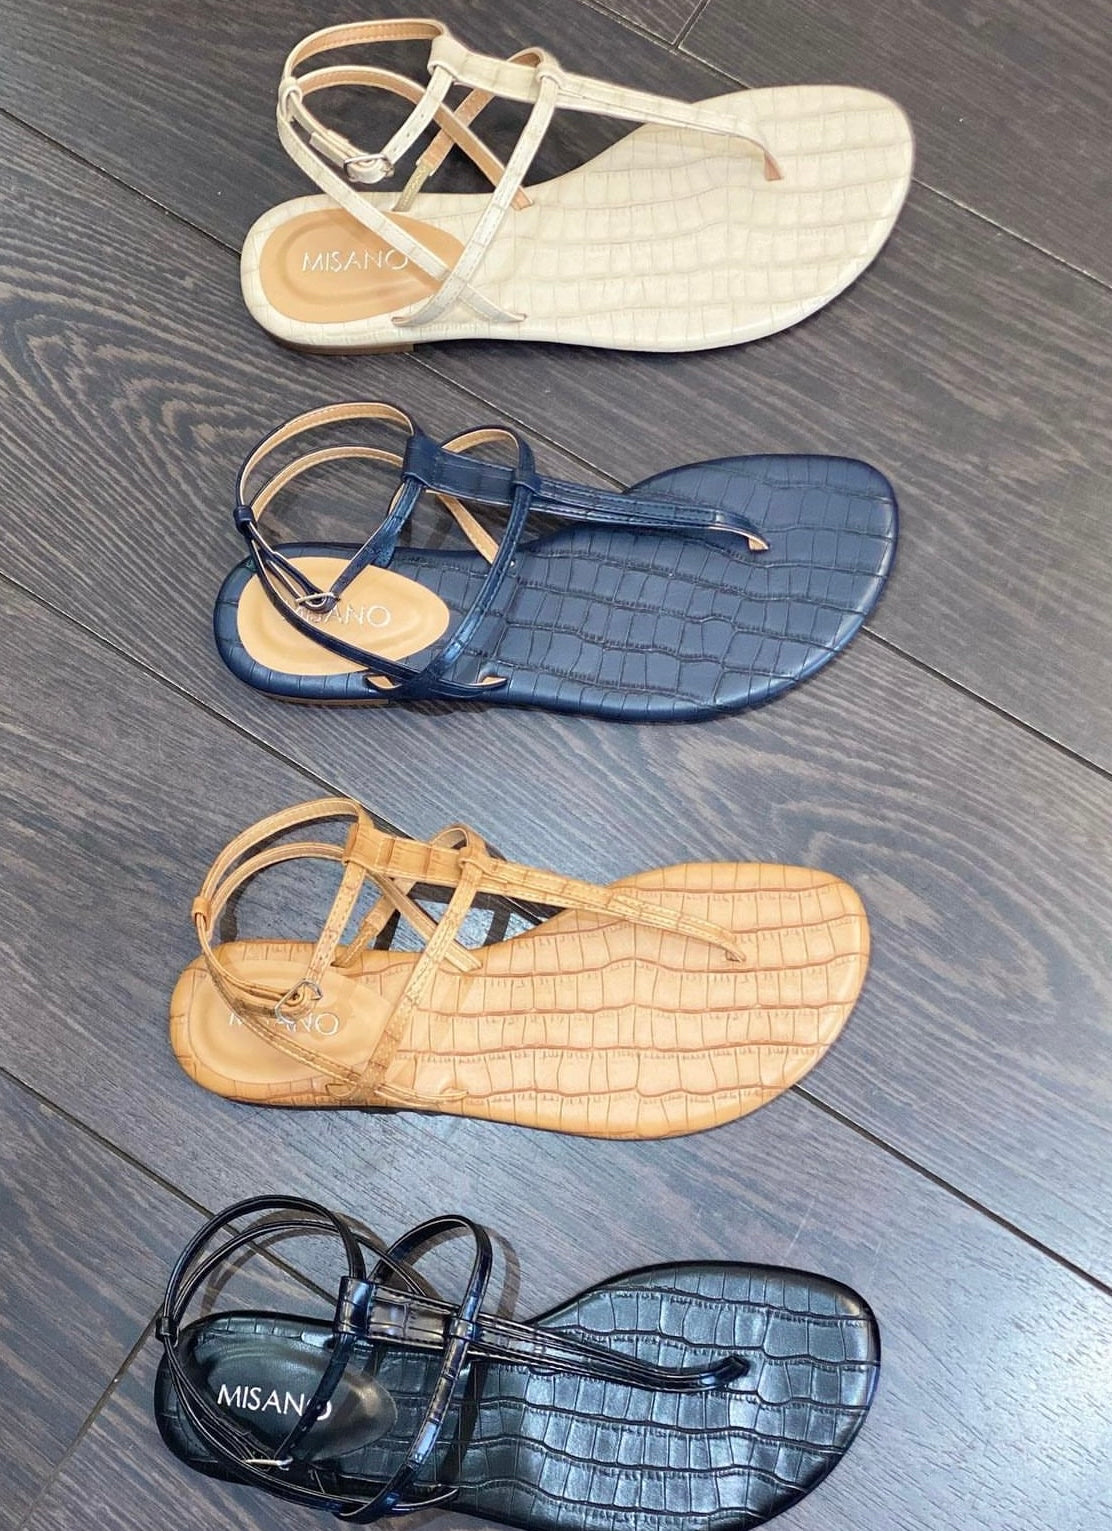 SHIZU CROC NAVY - MISANO - BF, on sale, womens footwear - Stomp Shoes Darwin